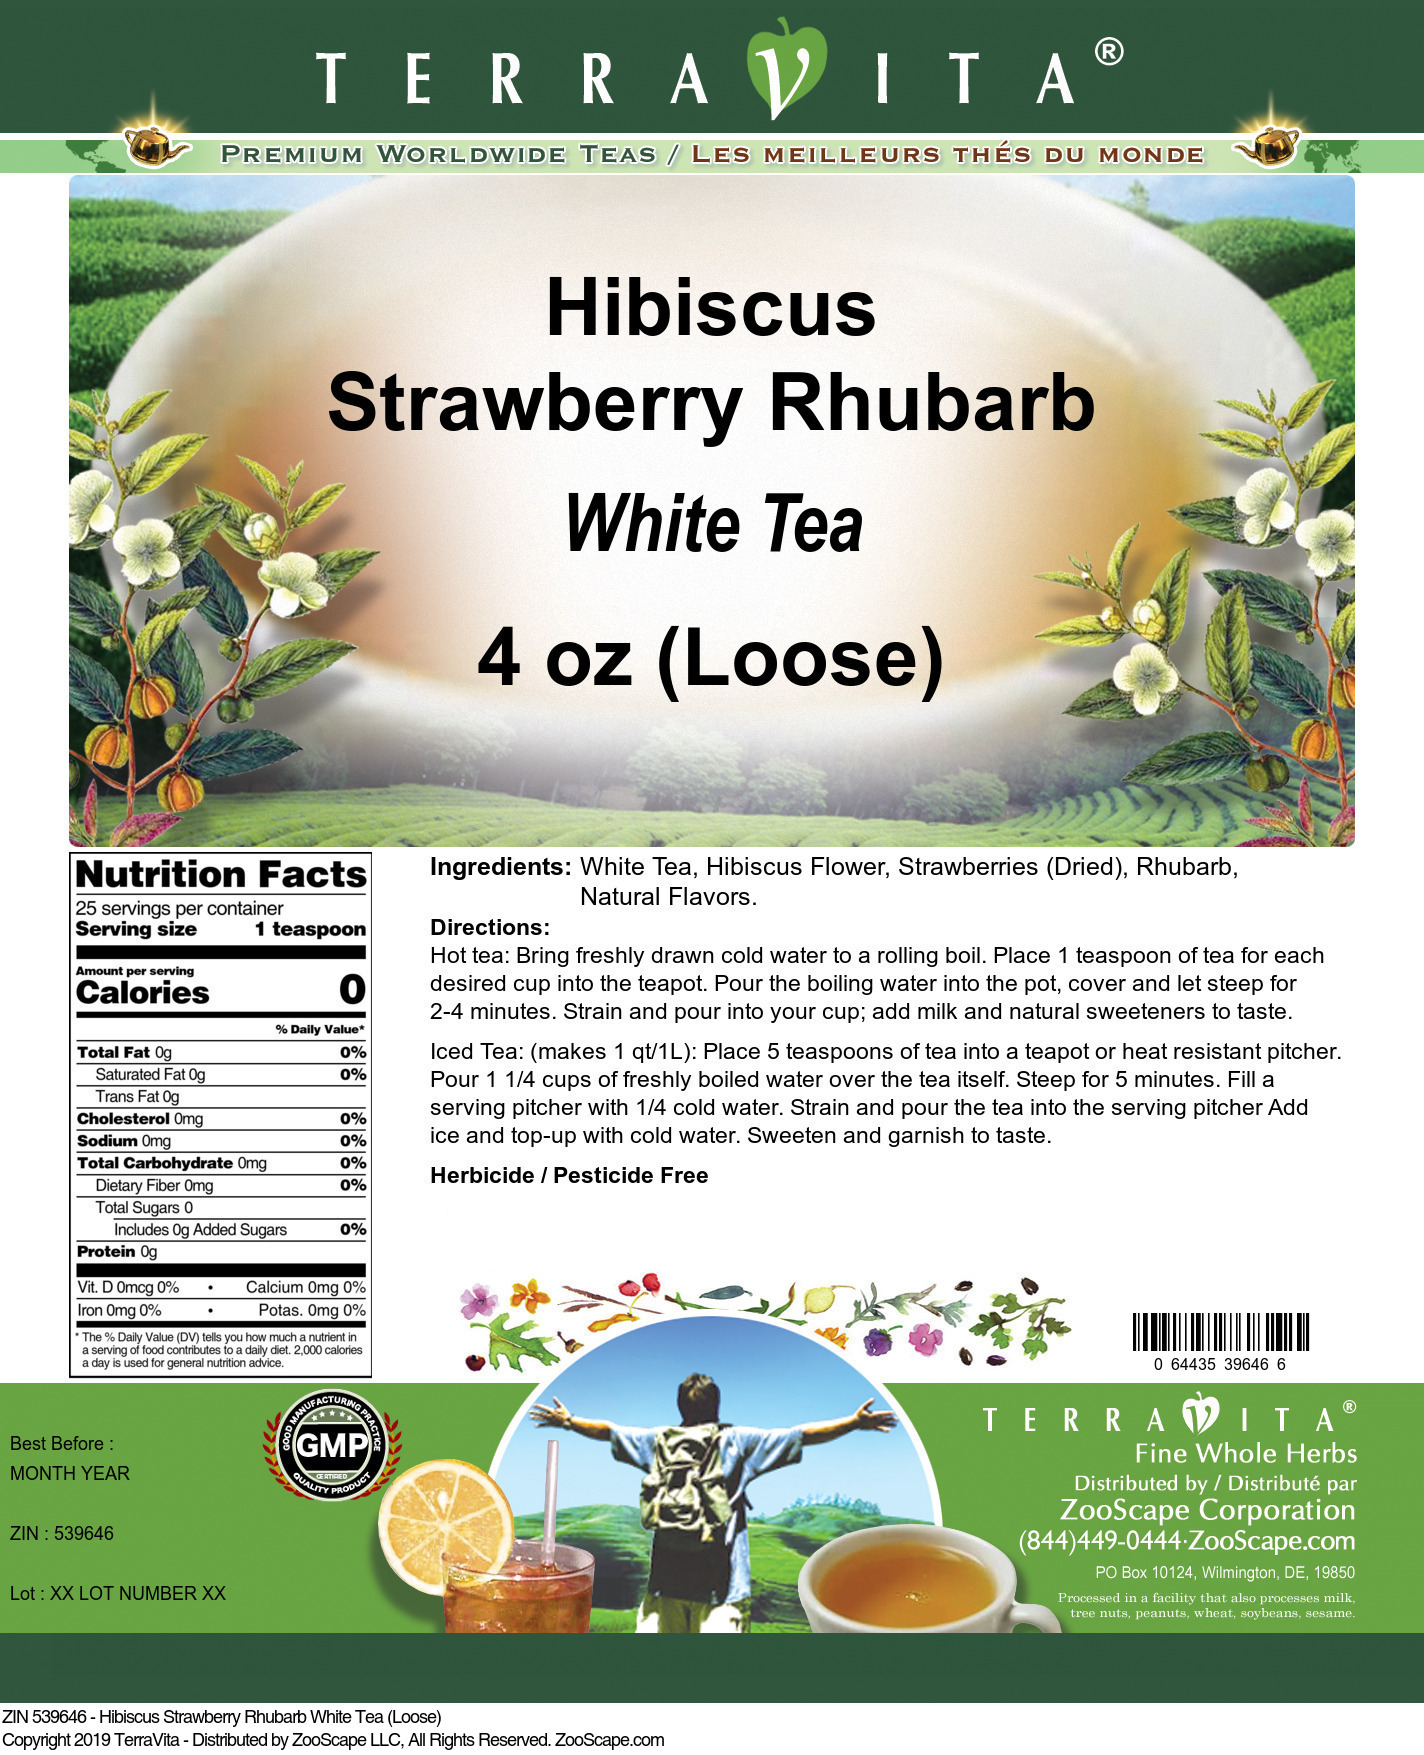 Hibiscus Strawberry Rhubarb White Tea (Loose) - Label